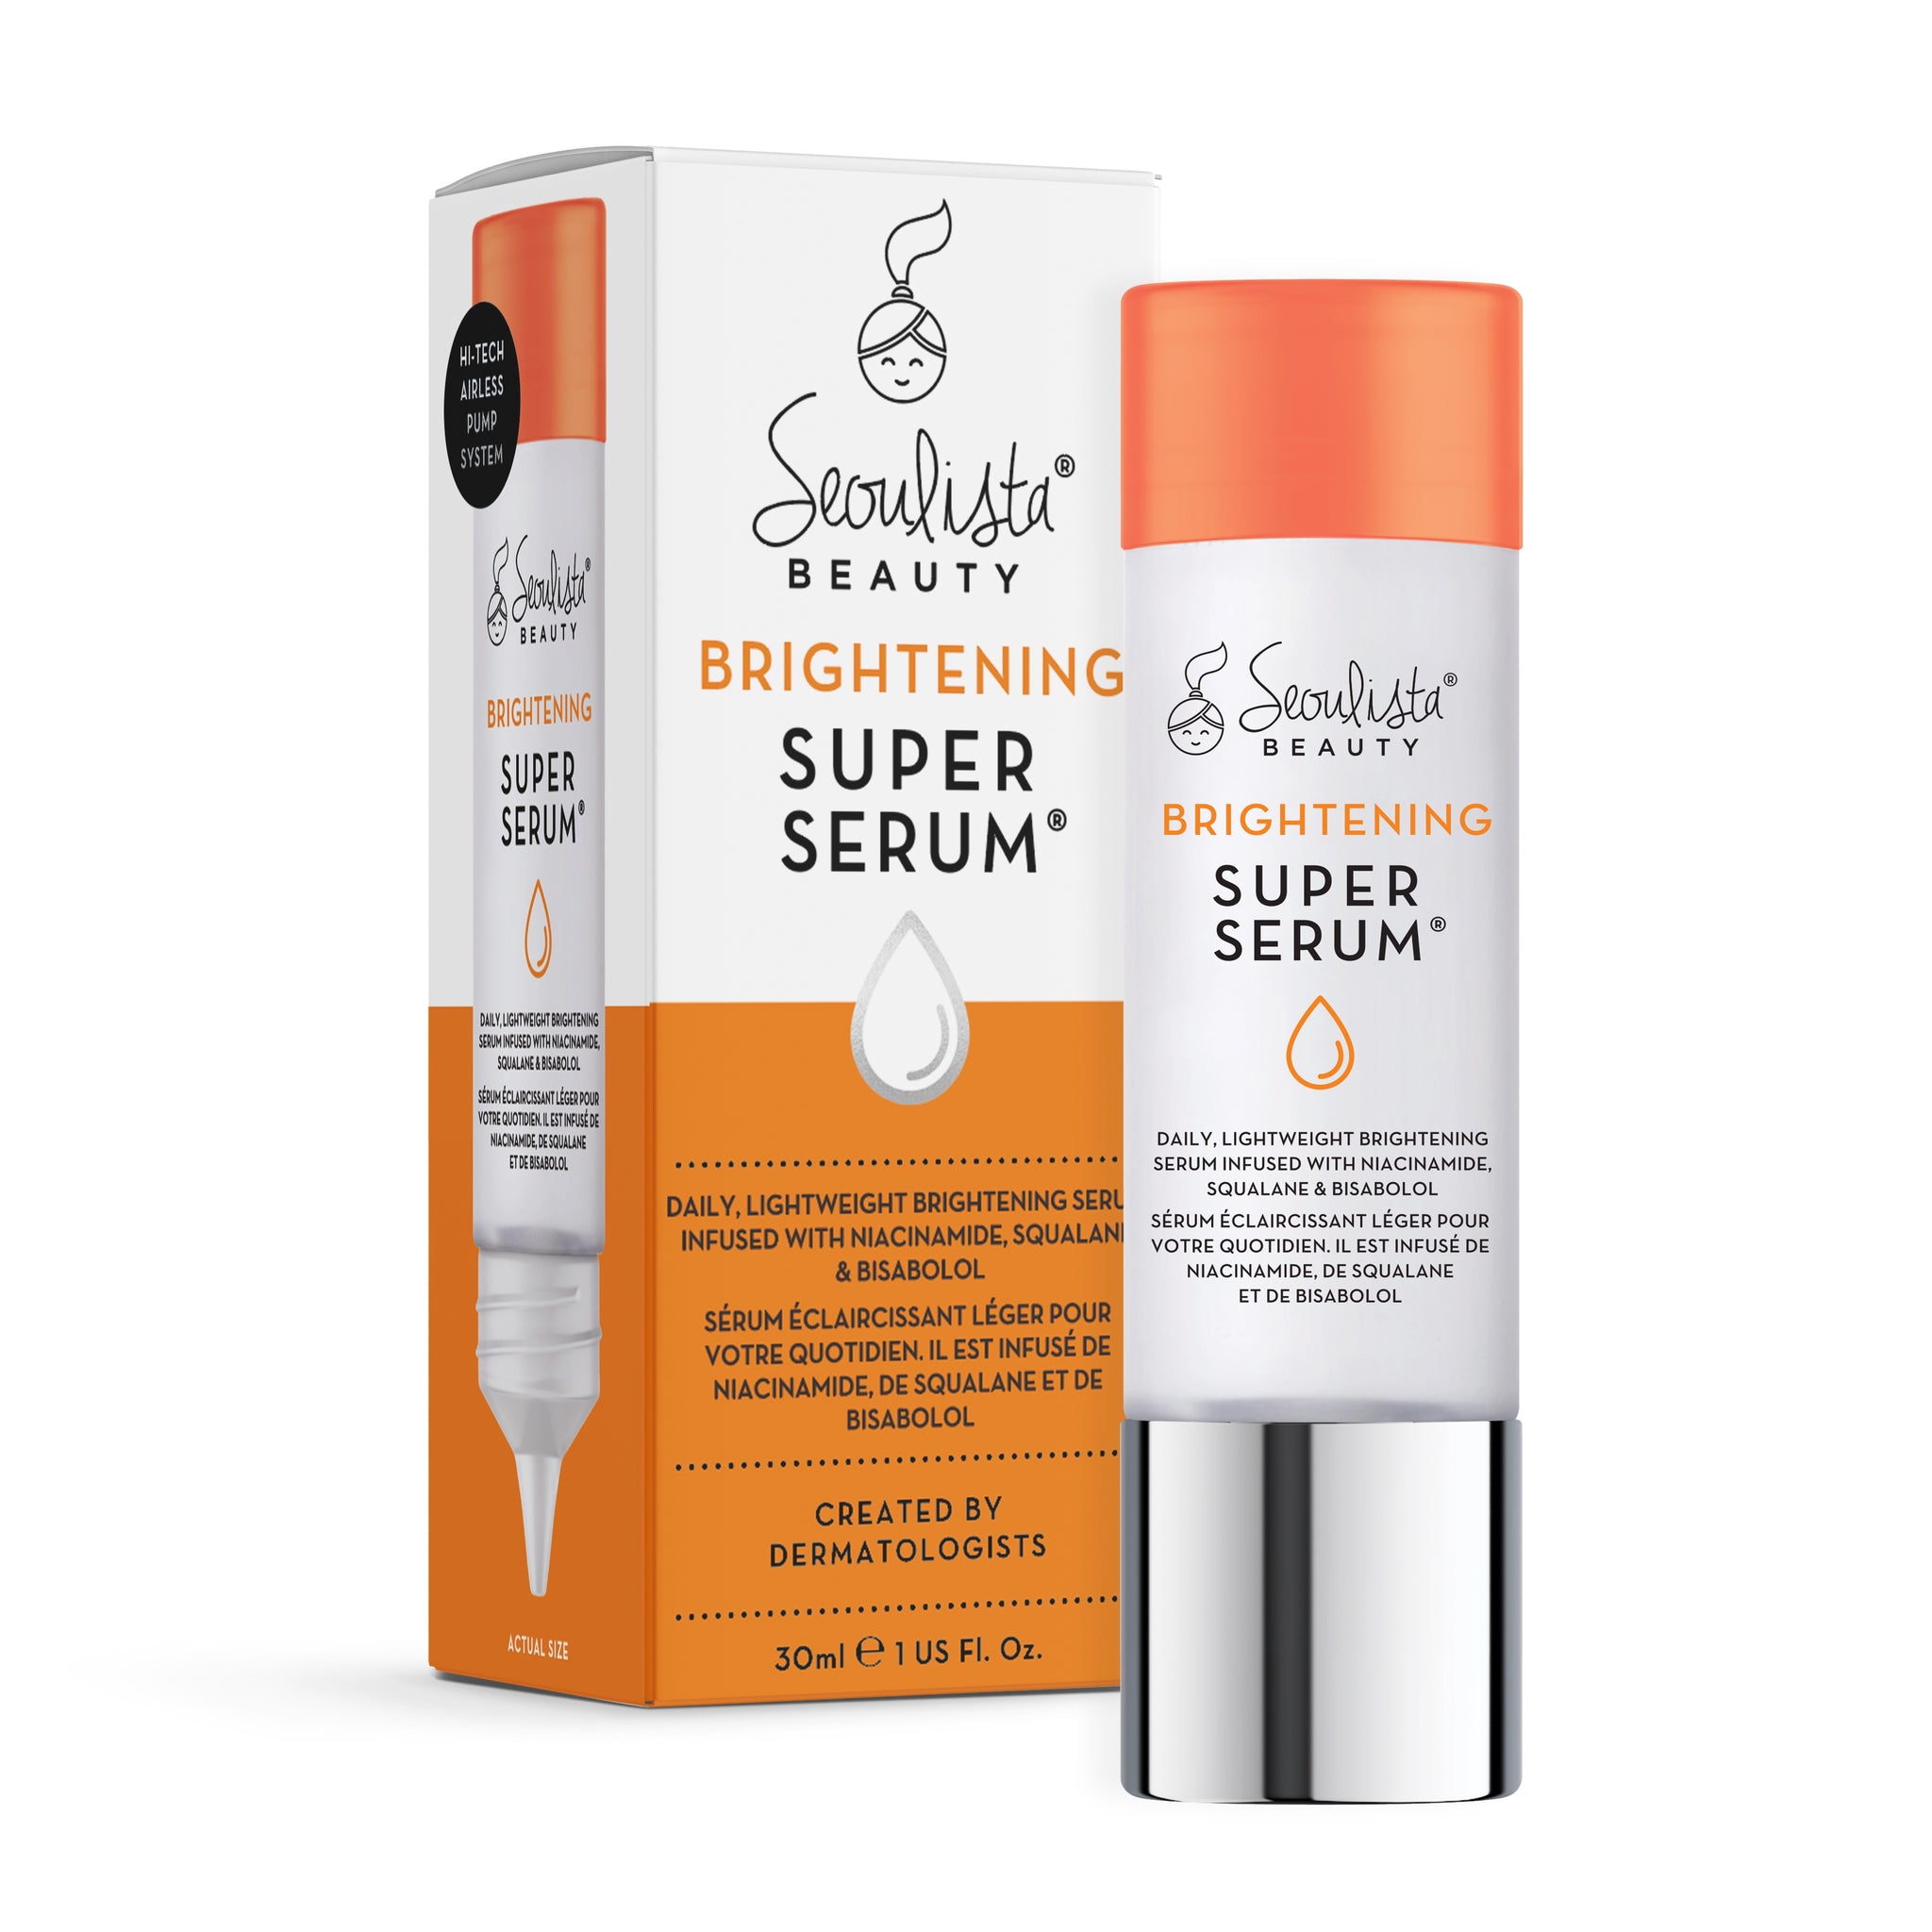 Seoulista Beauty Brightening Super Serum™